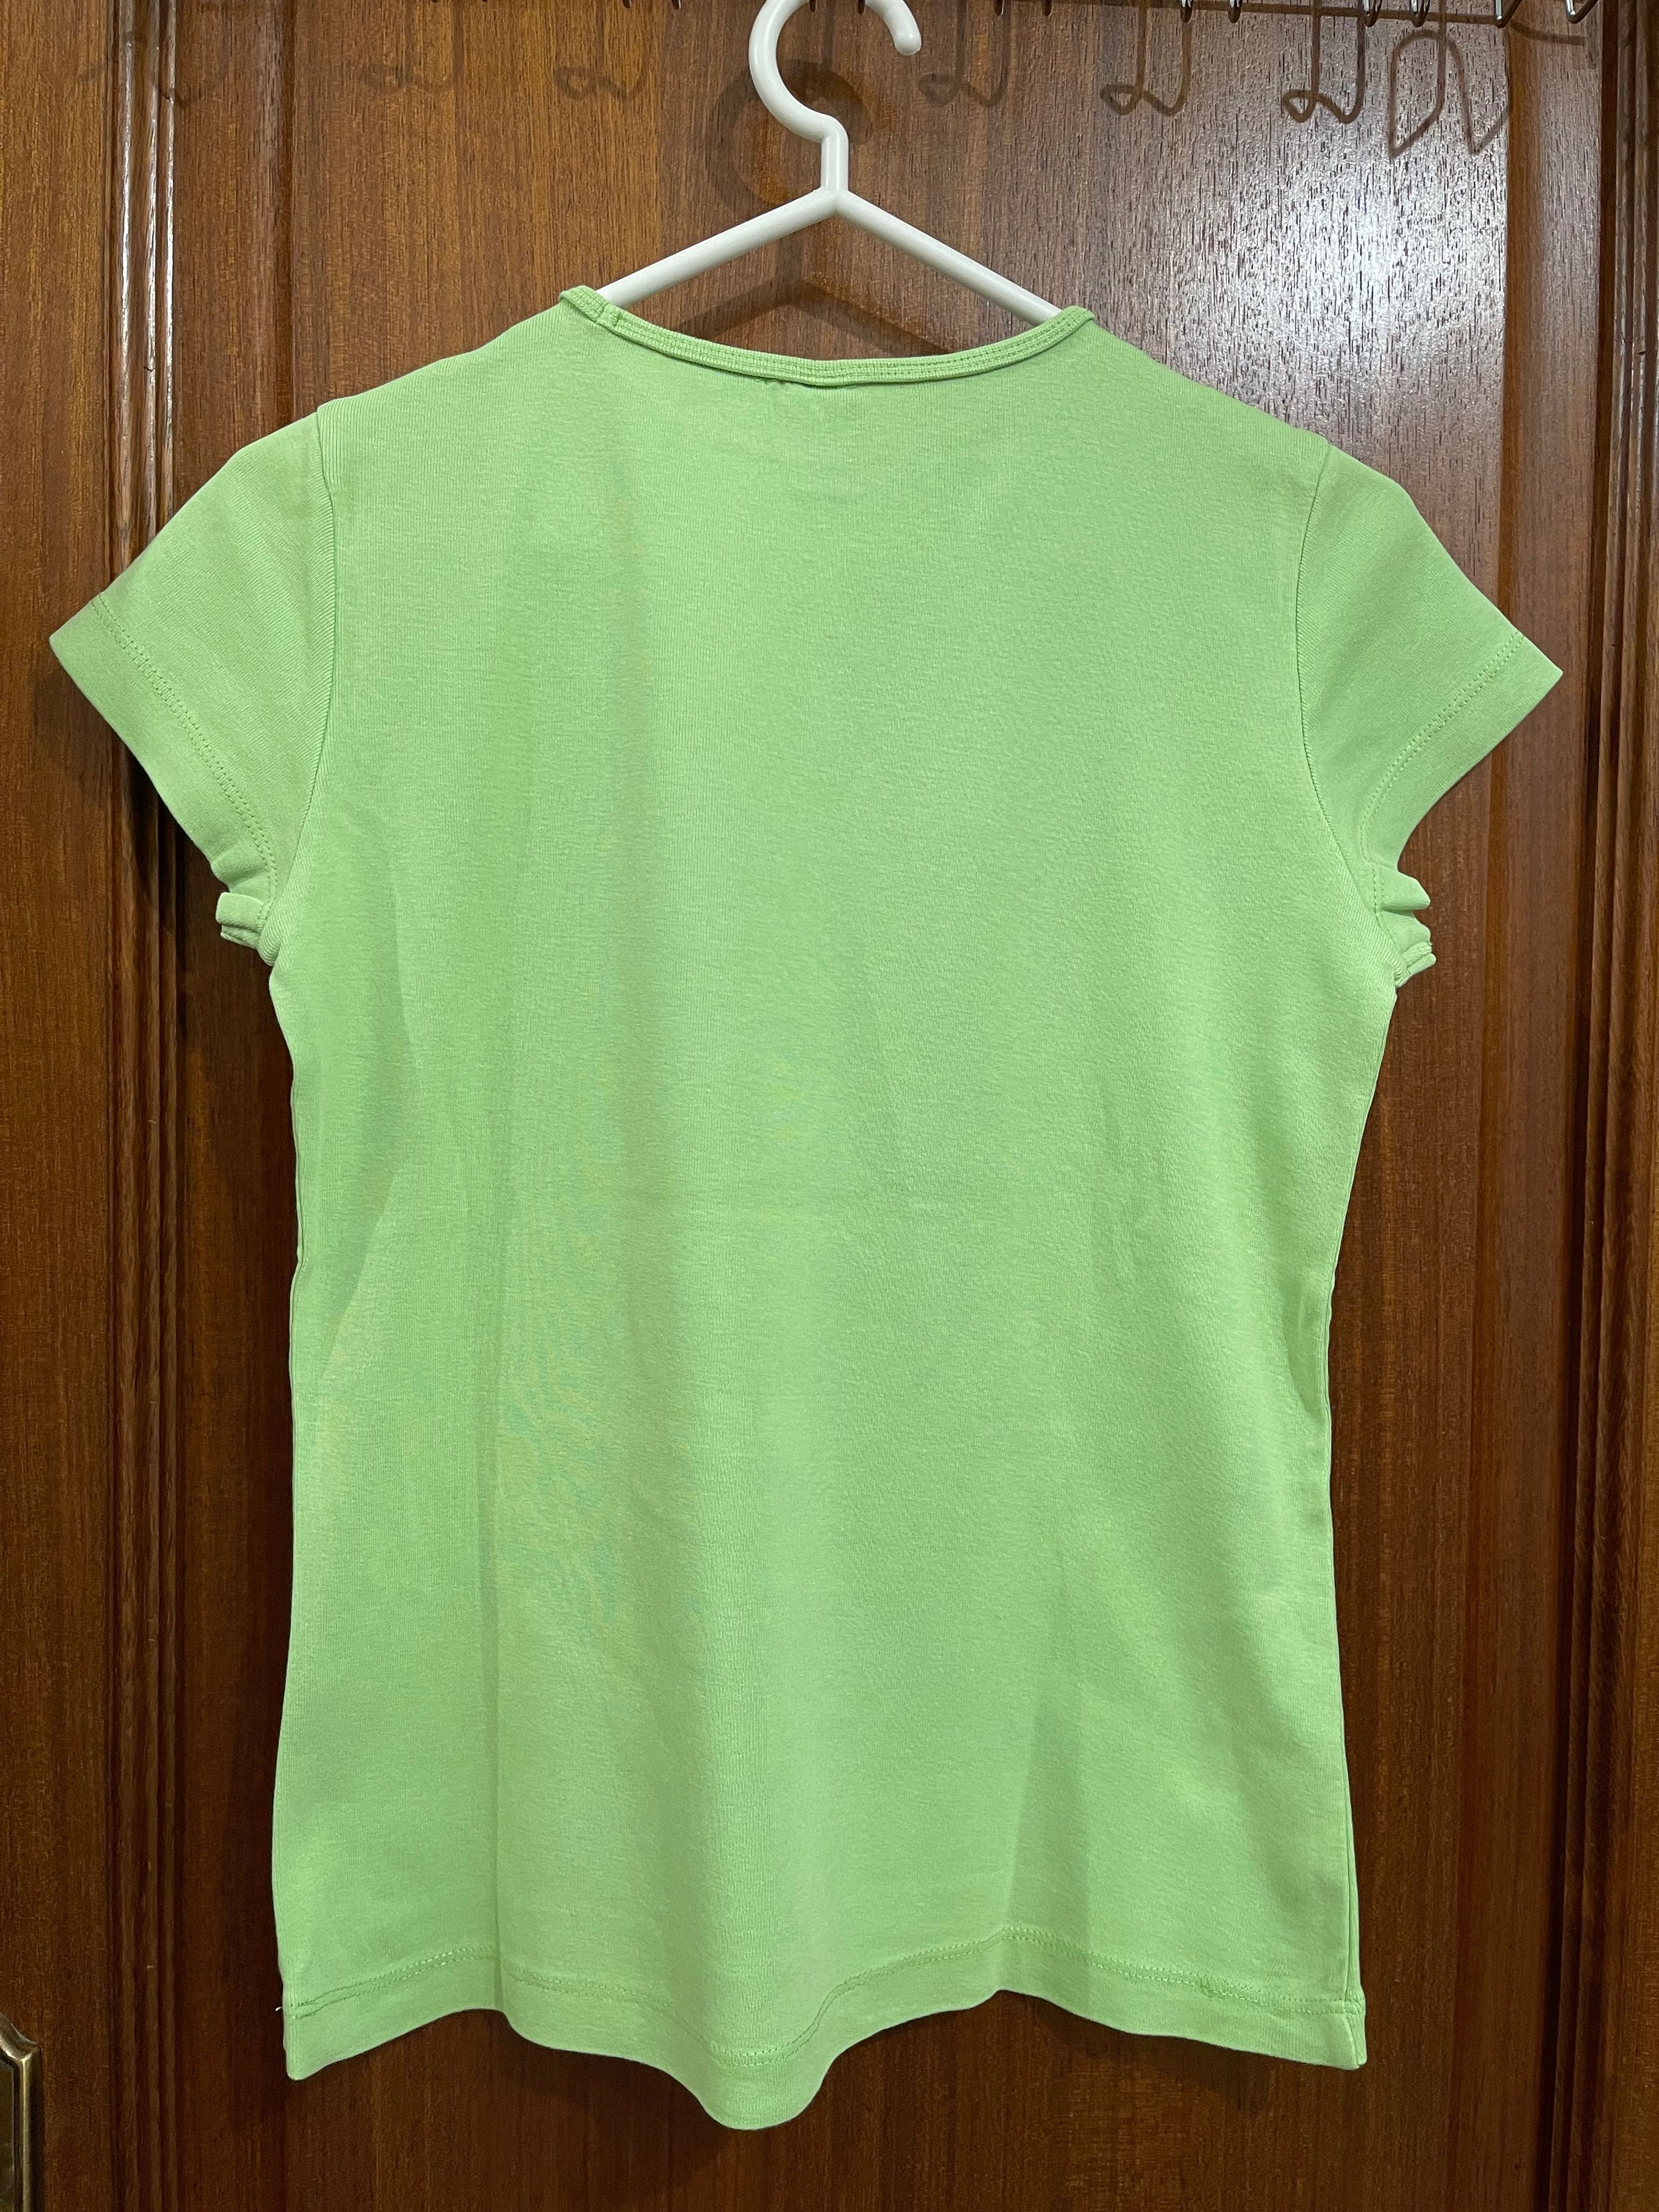 Tshirt Básica Verde, da Zara Kids